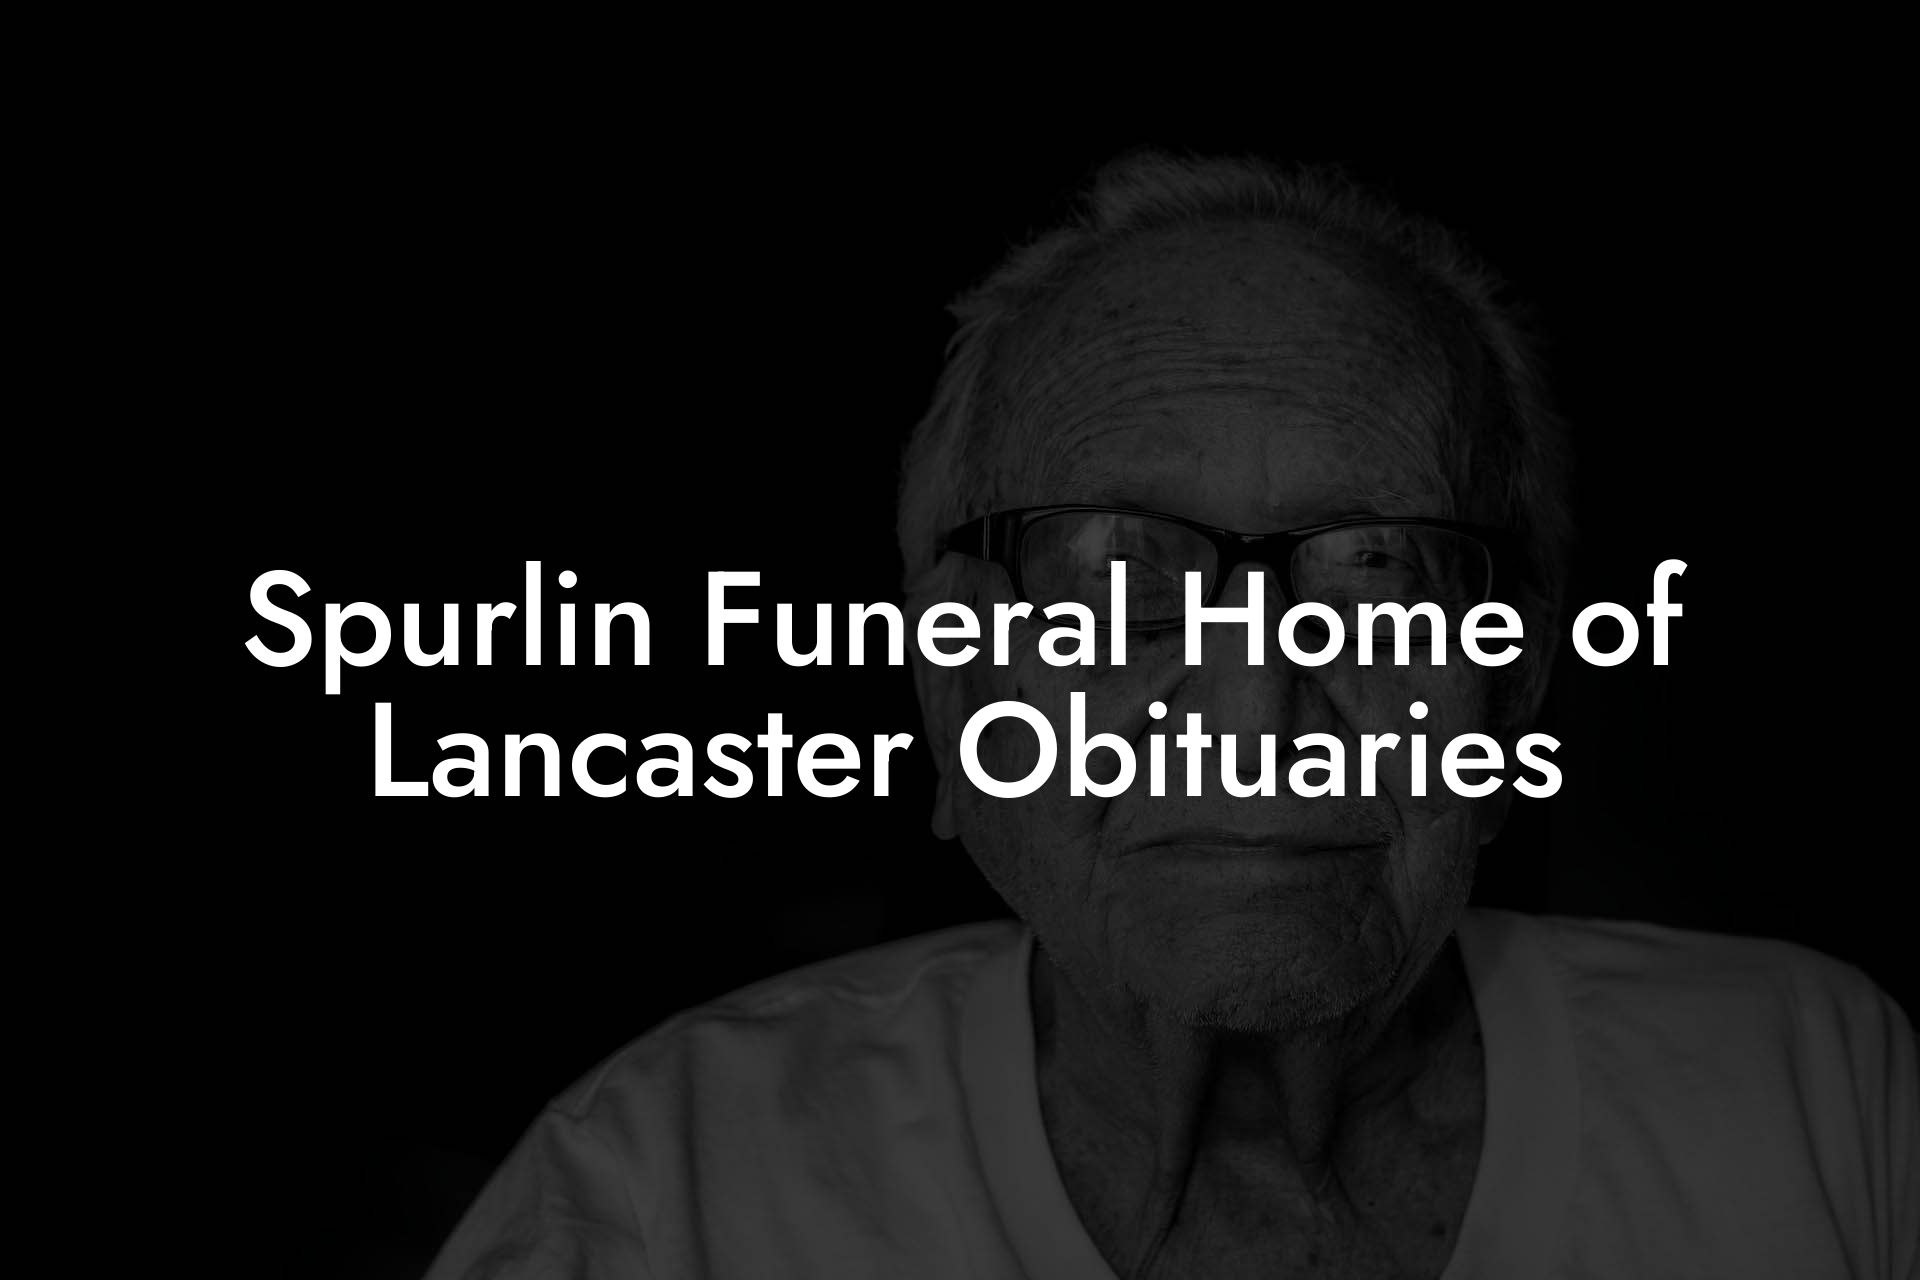 Spurlin Funeral Home of Lancaster Obituaries